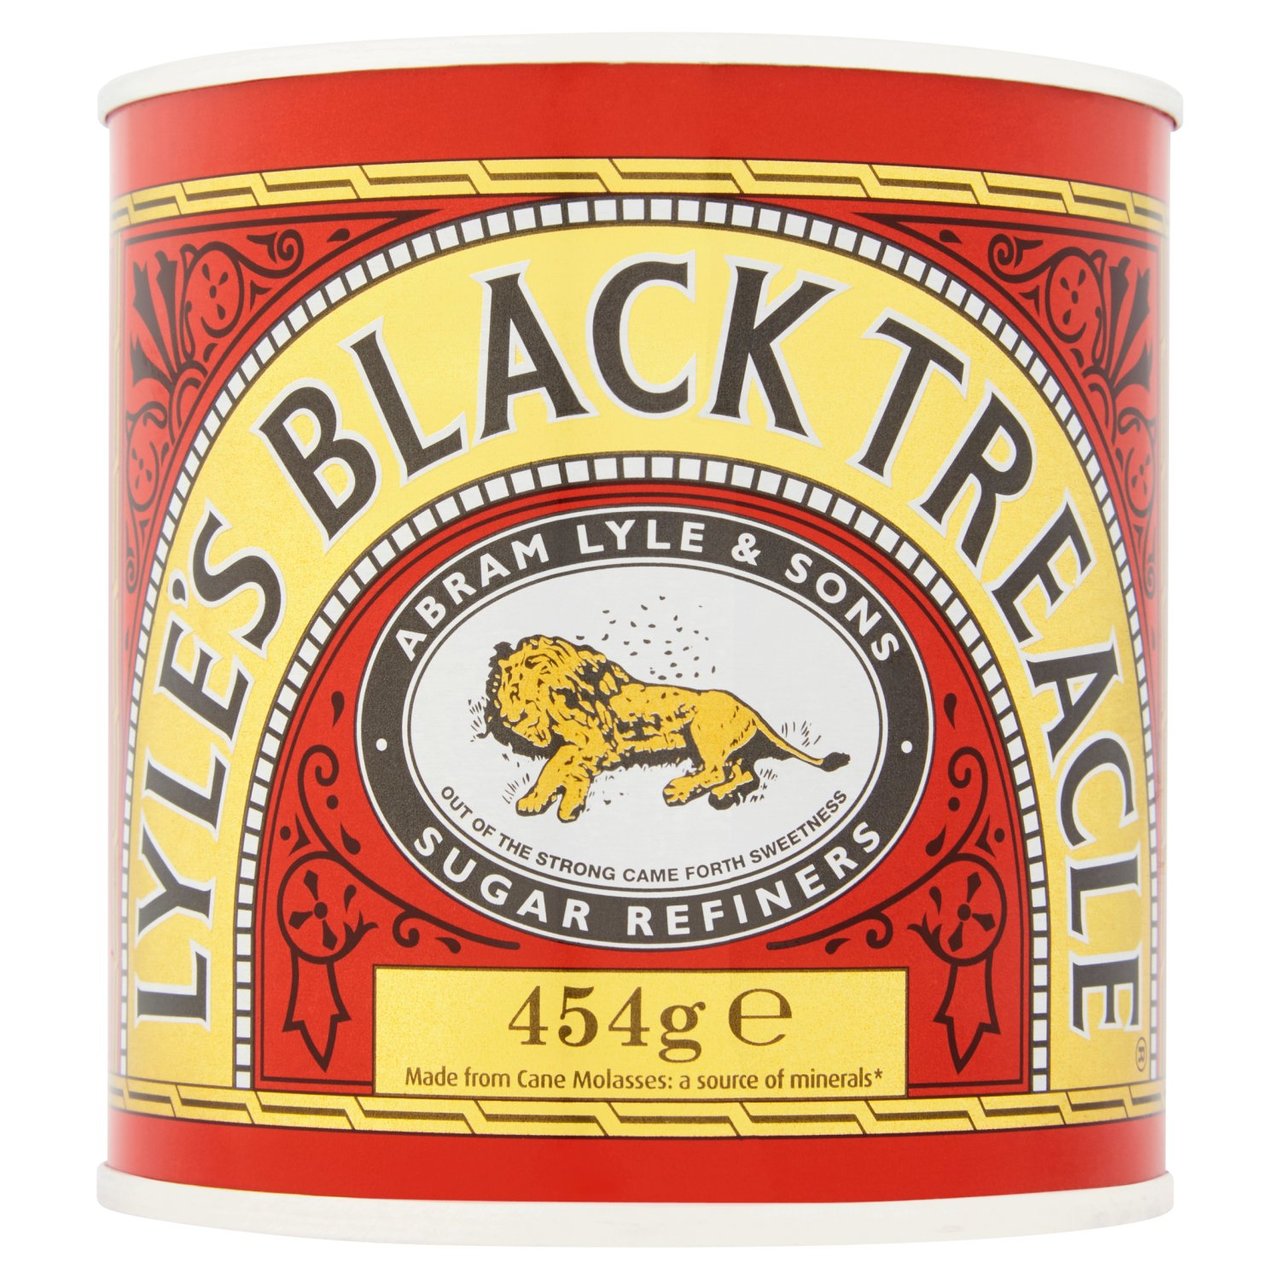 Lyle's Black Treacle 454g